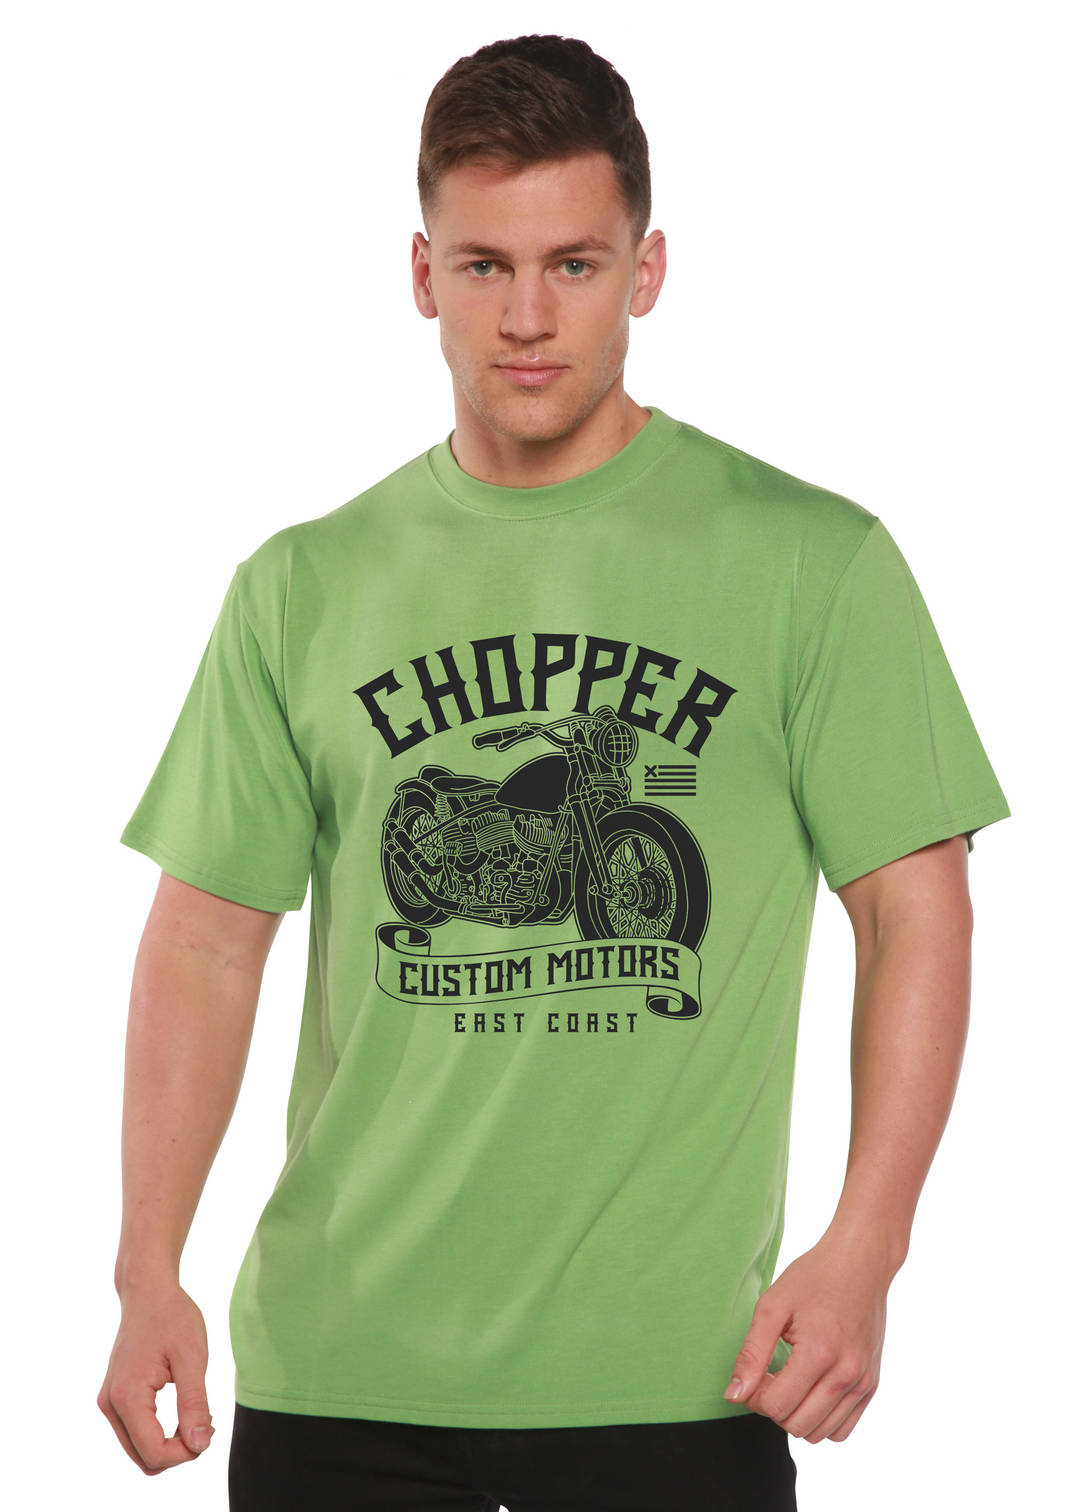 Chopper Custom Motors men's bamboo tshirt green tea